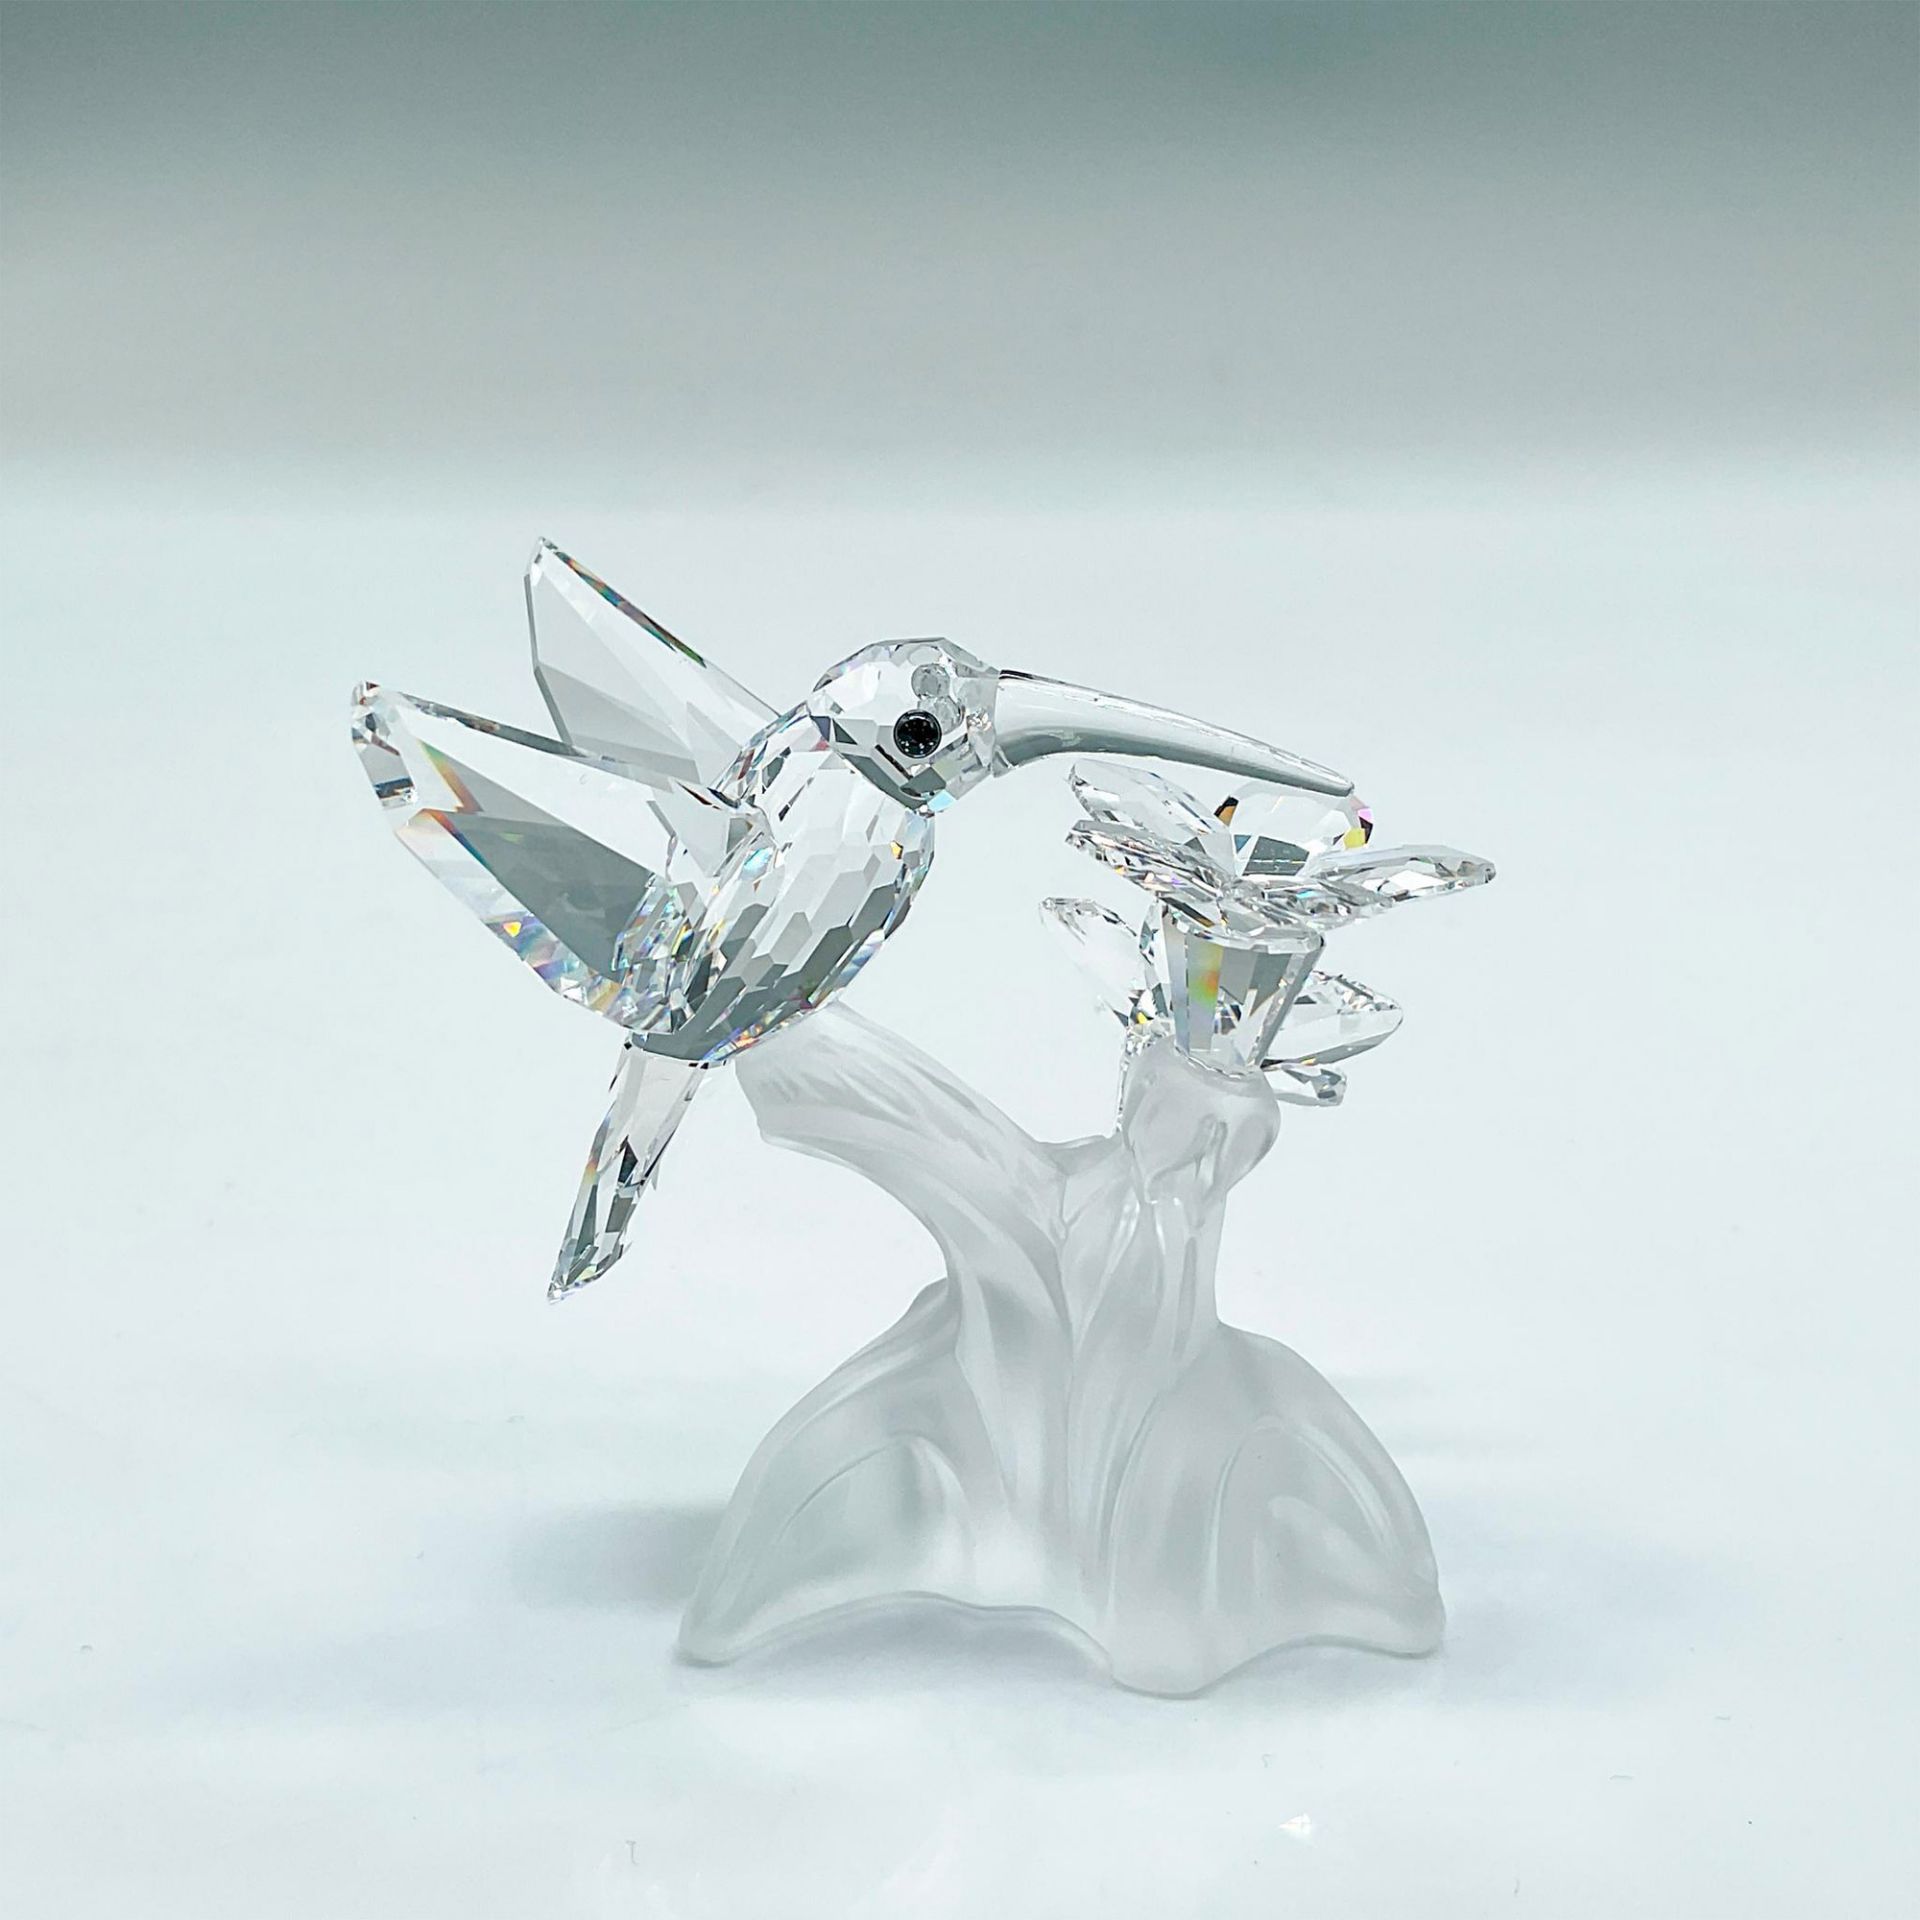 Swarovski Crystal Figurine, Hummingbird - Image 2 of 4